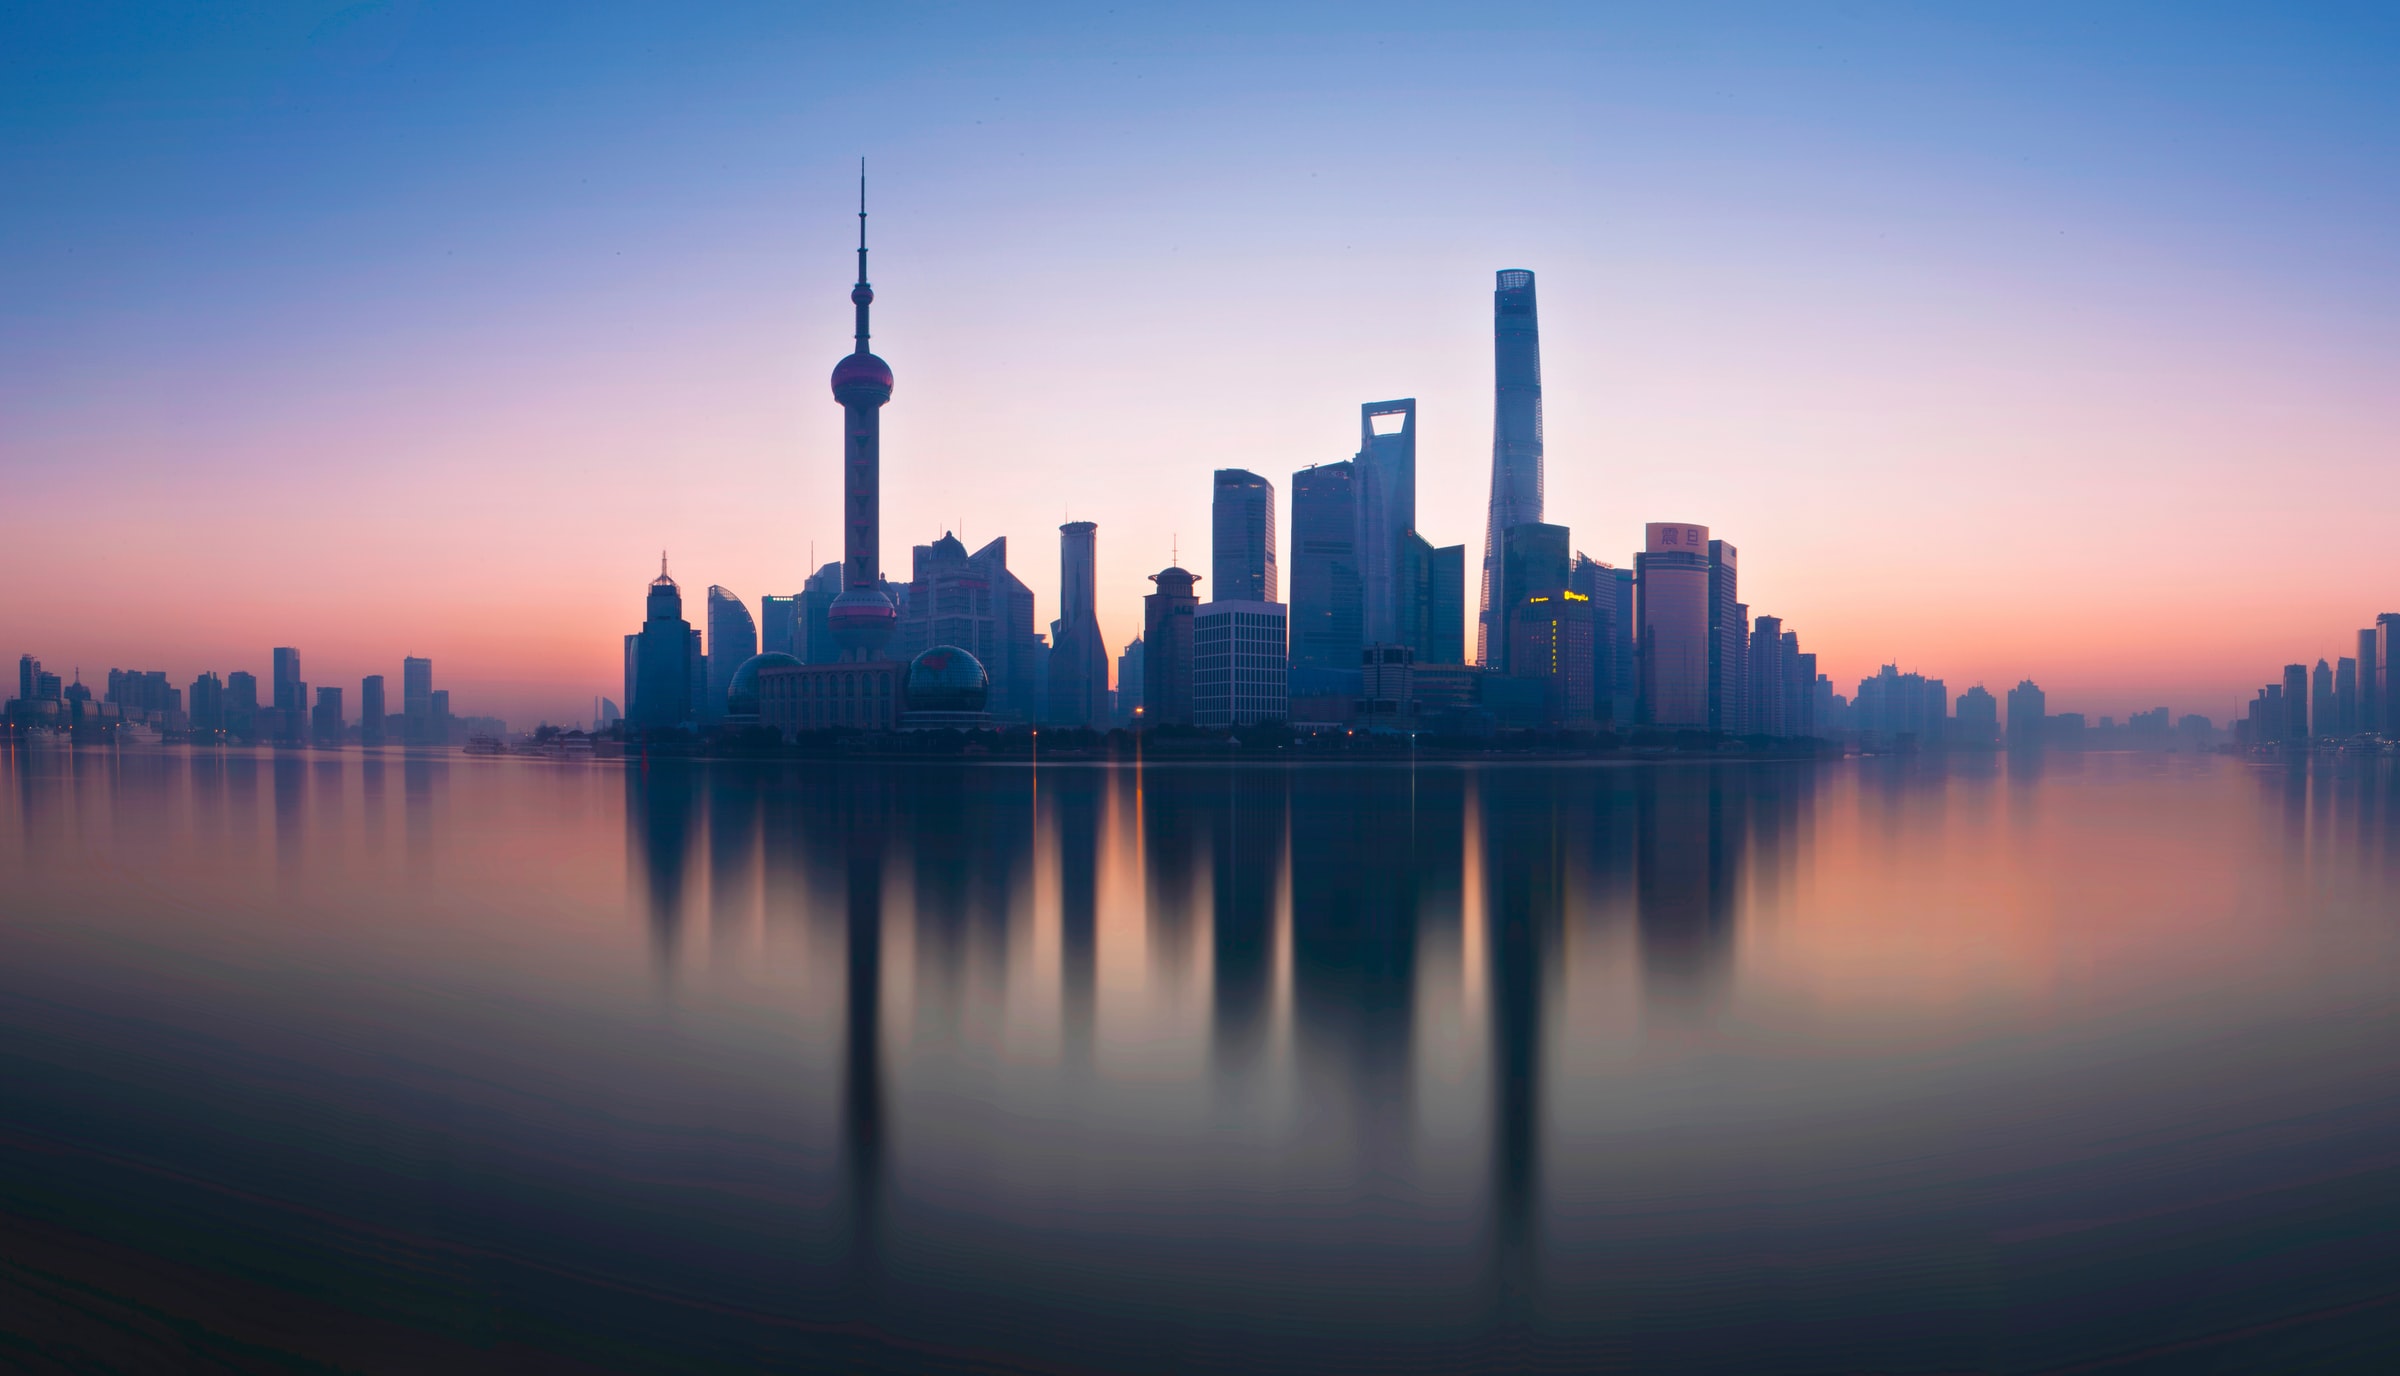 Shanghai skyline in silhouette